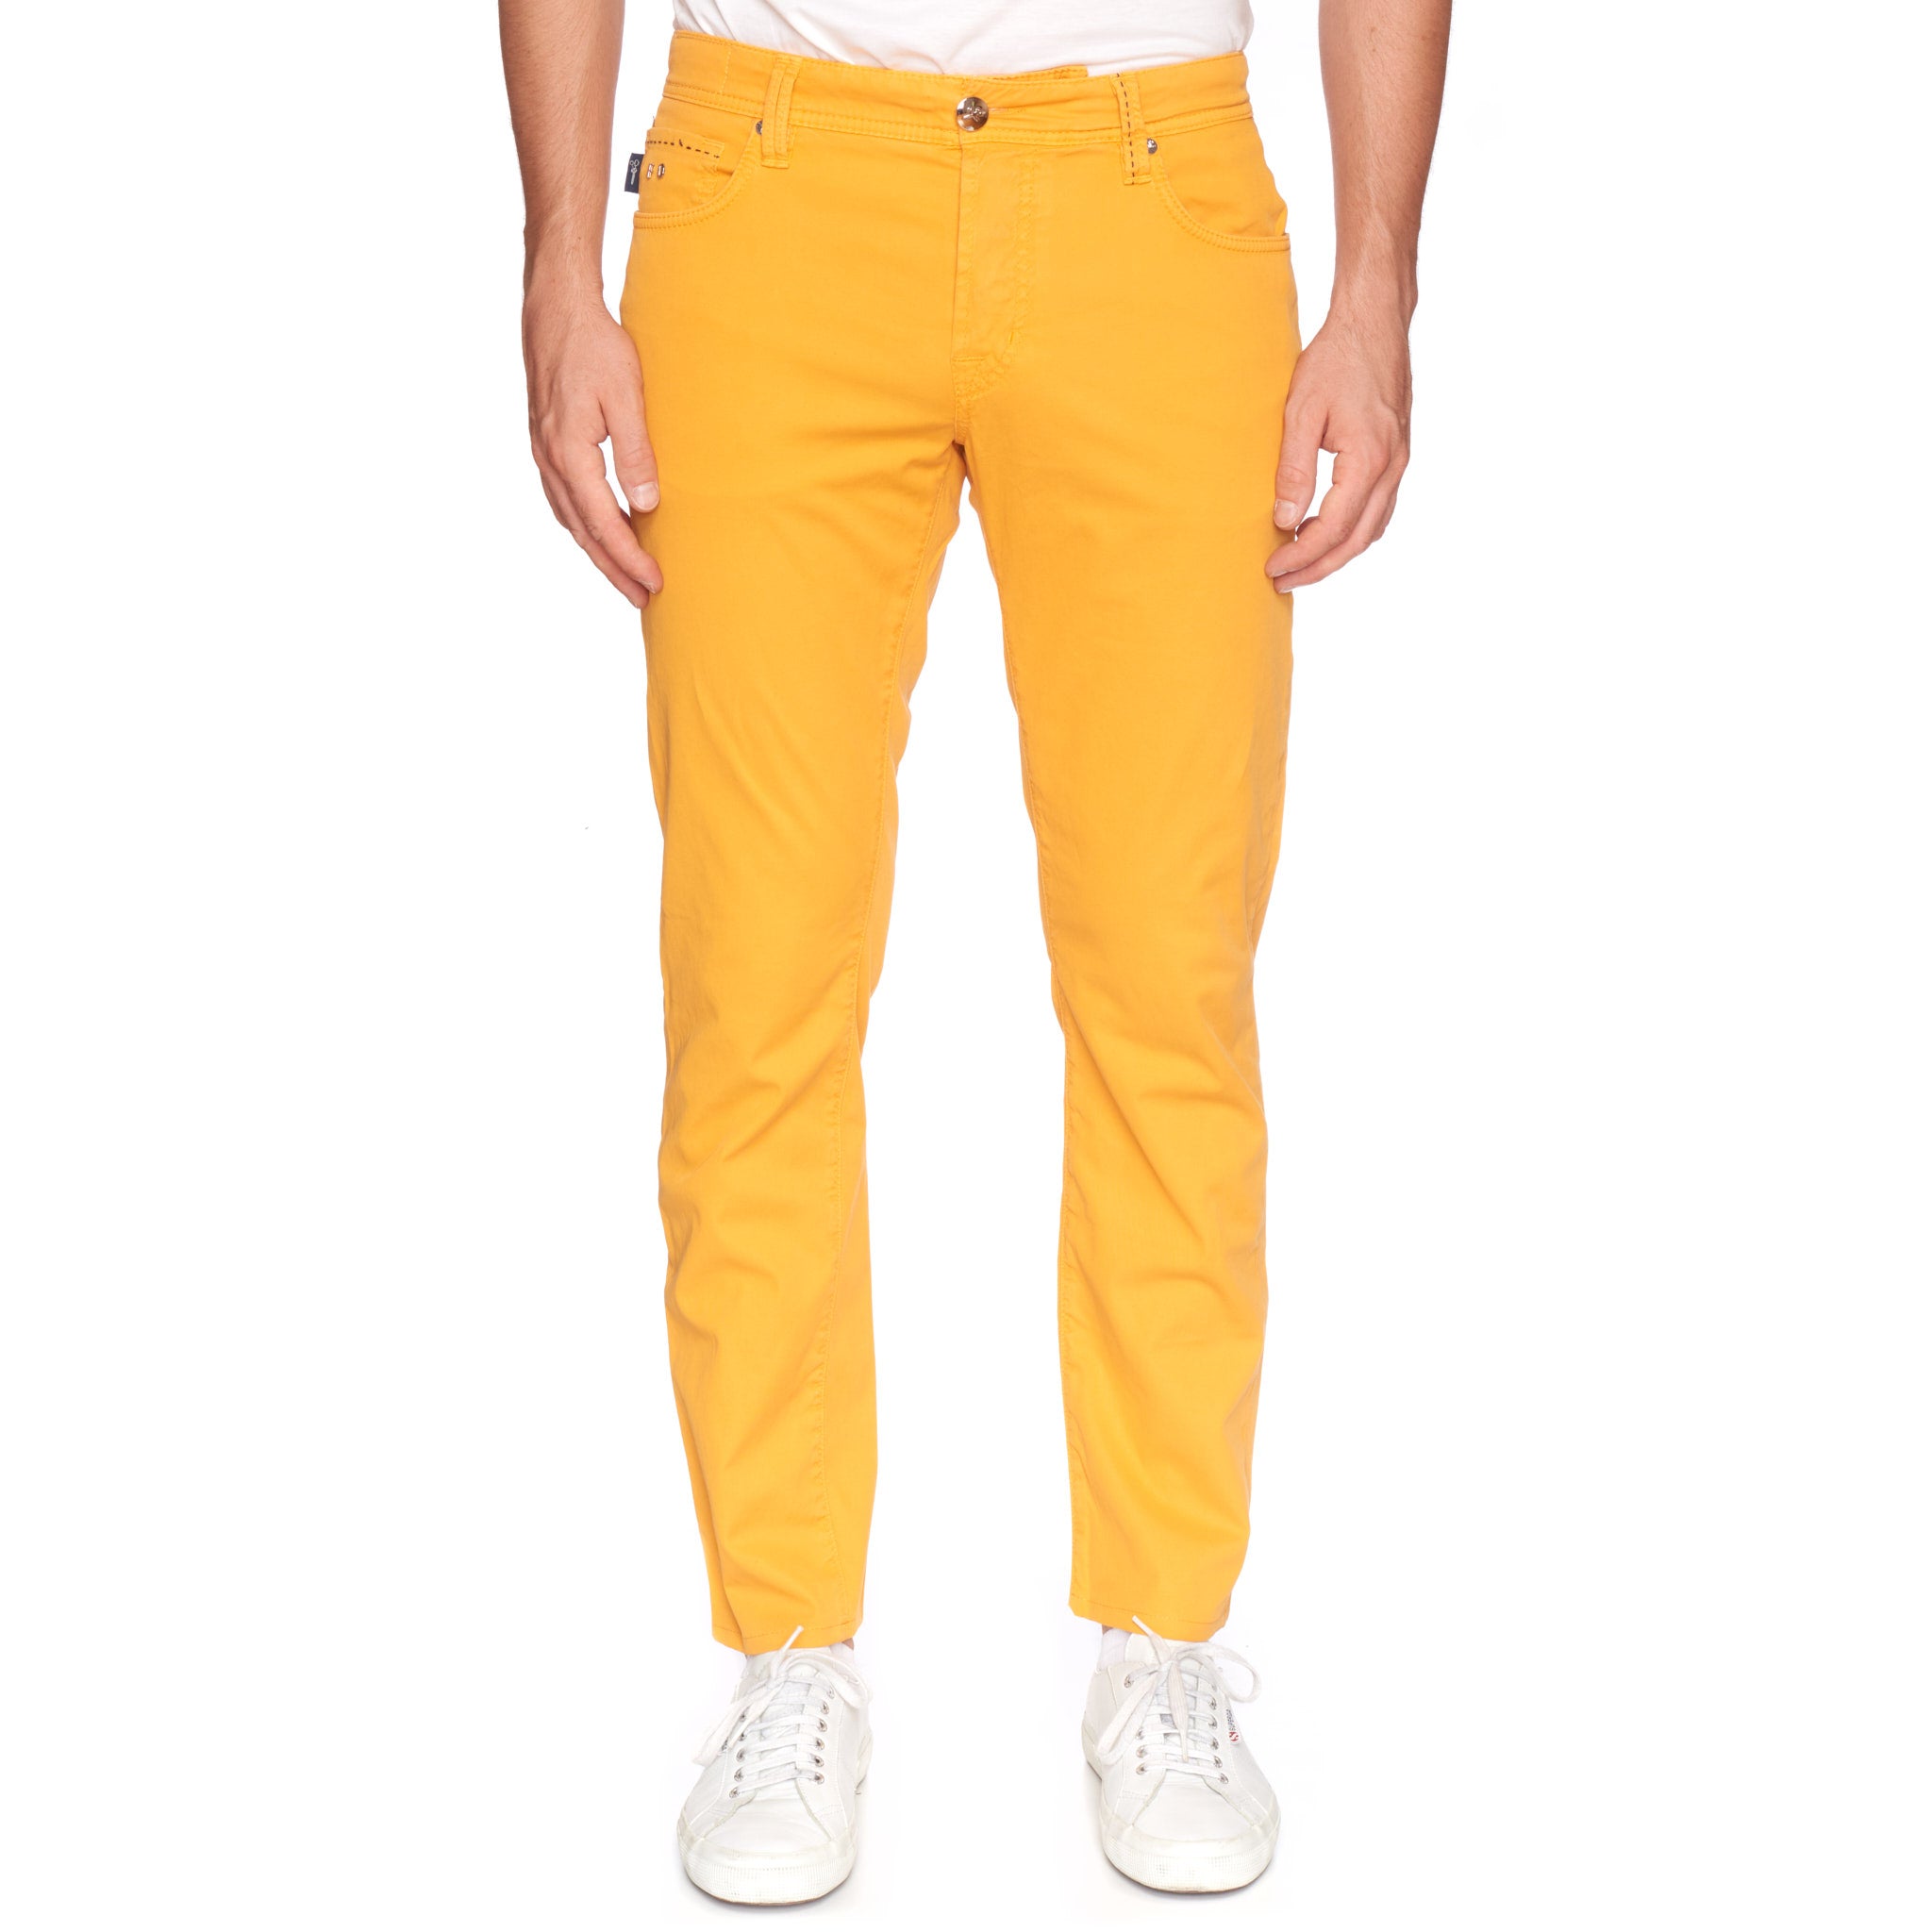 TRAMAROSSA Colour Leonardo Orange Stretch Twill Cotton Slim Fit Jeans Pants US 33